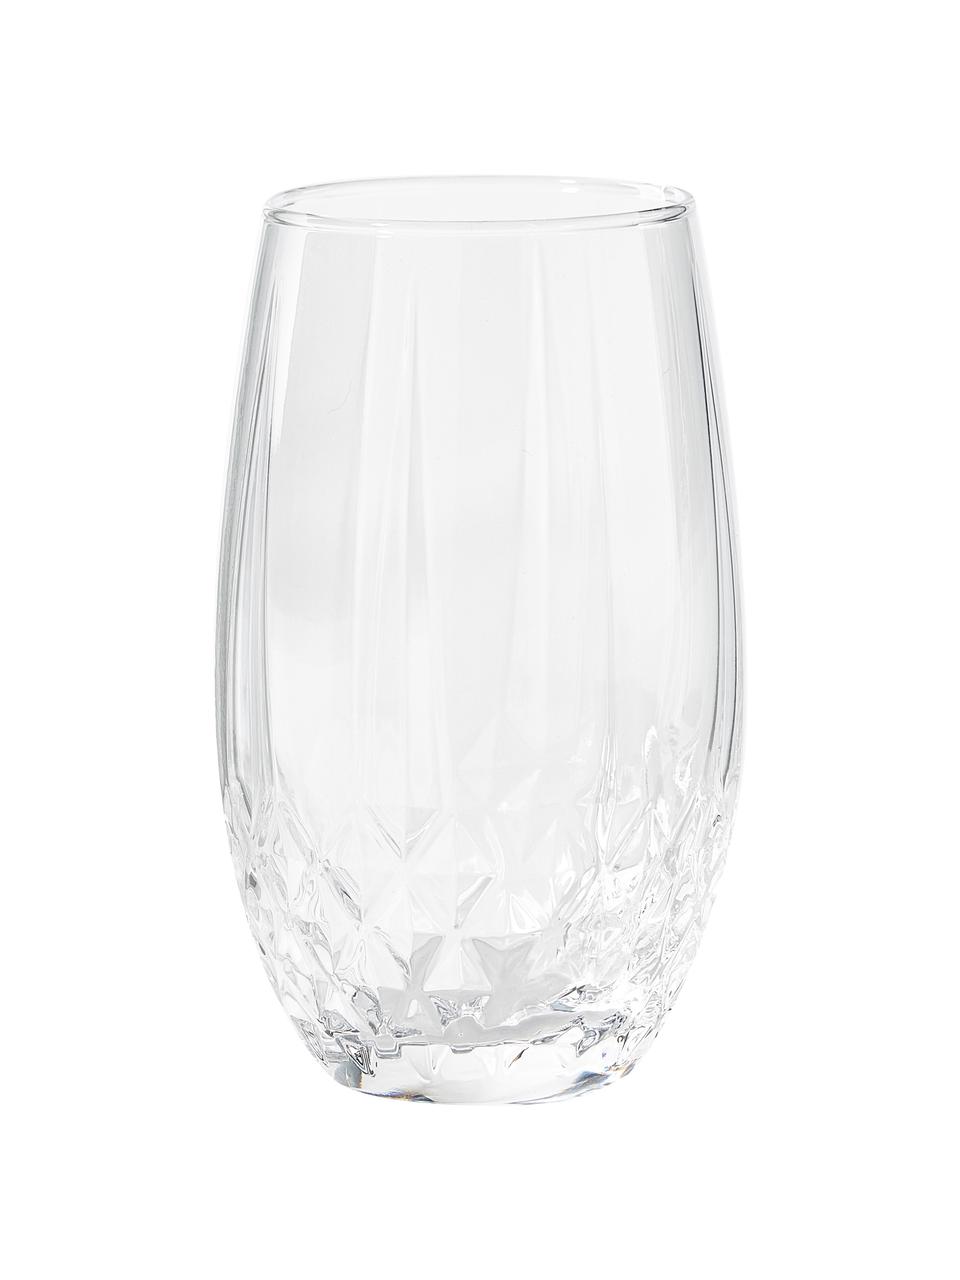 Drankset Westloop, 7-delig, Glas, Transparant, Set met verschillende formaten